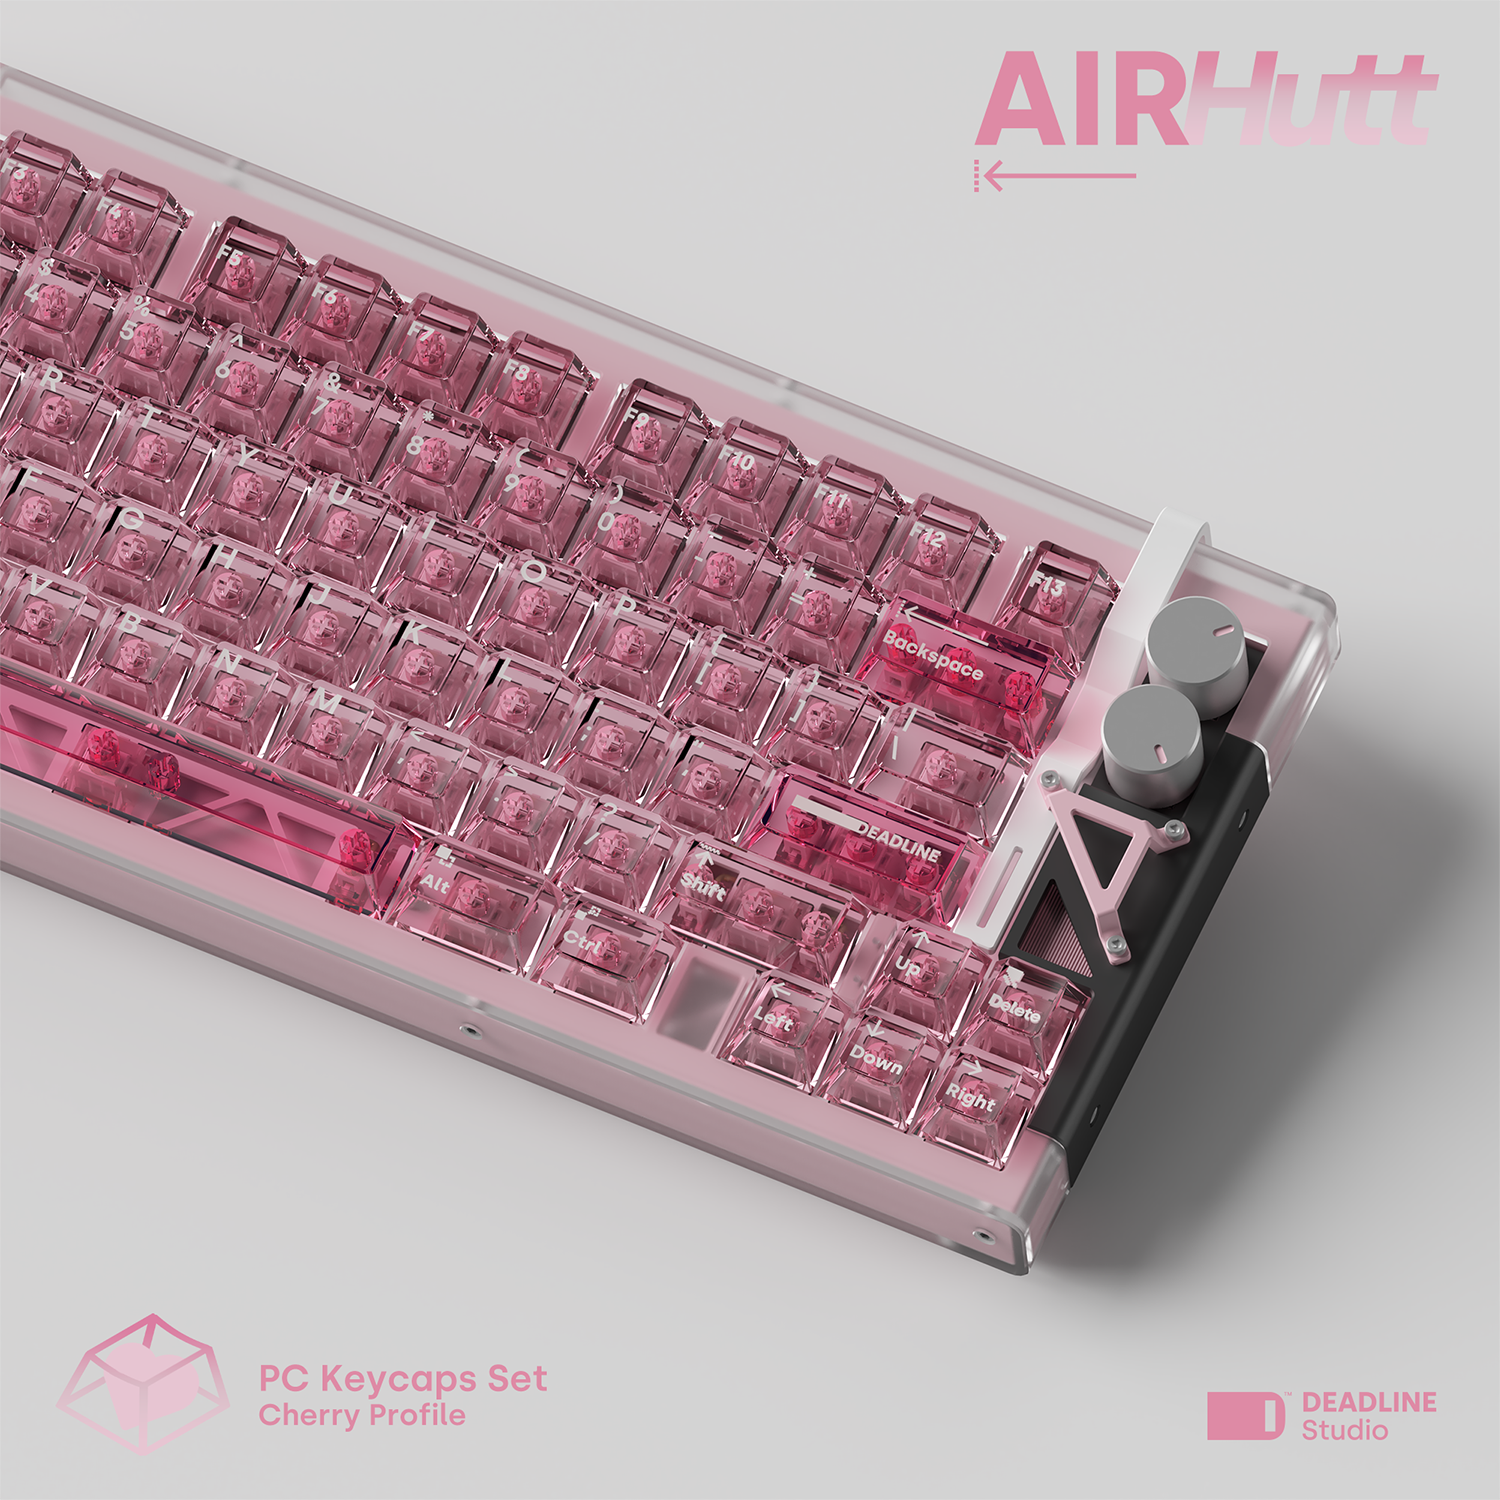 [Group Buy] Deadline Air-Hutt PC Keycaps